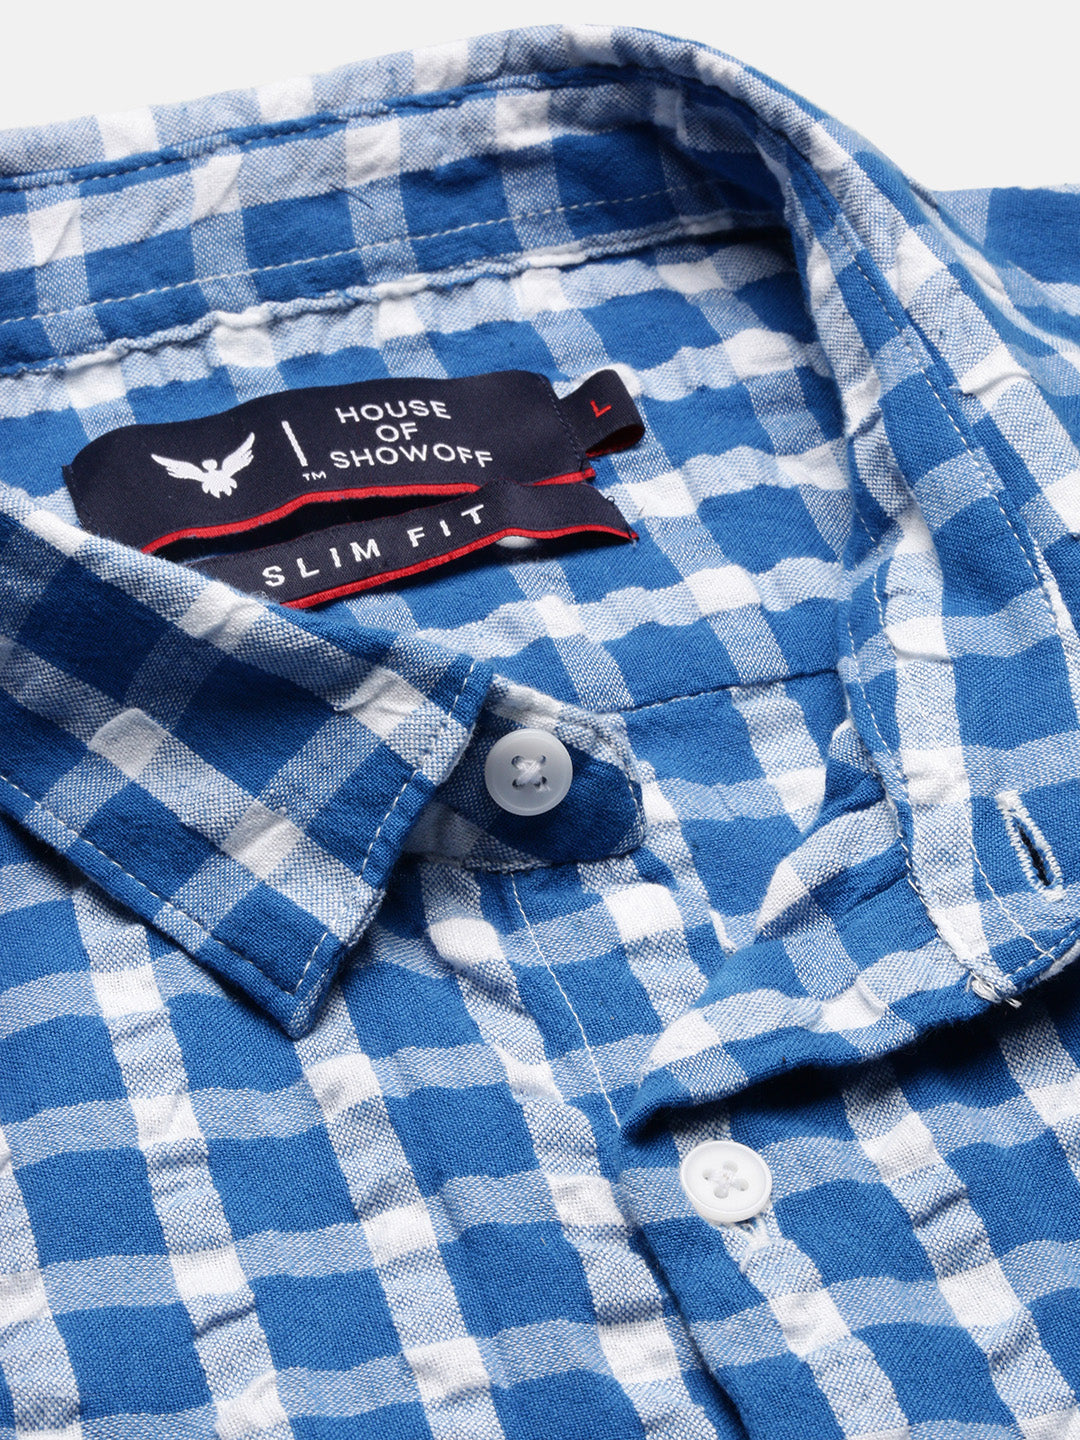 Men Spread Collar Checked Slim Fit Blue Shirt